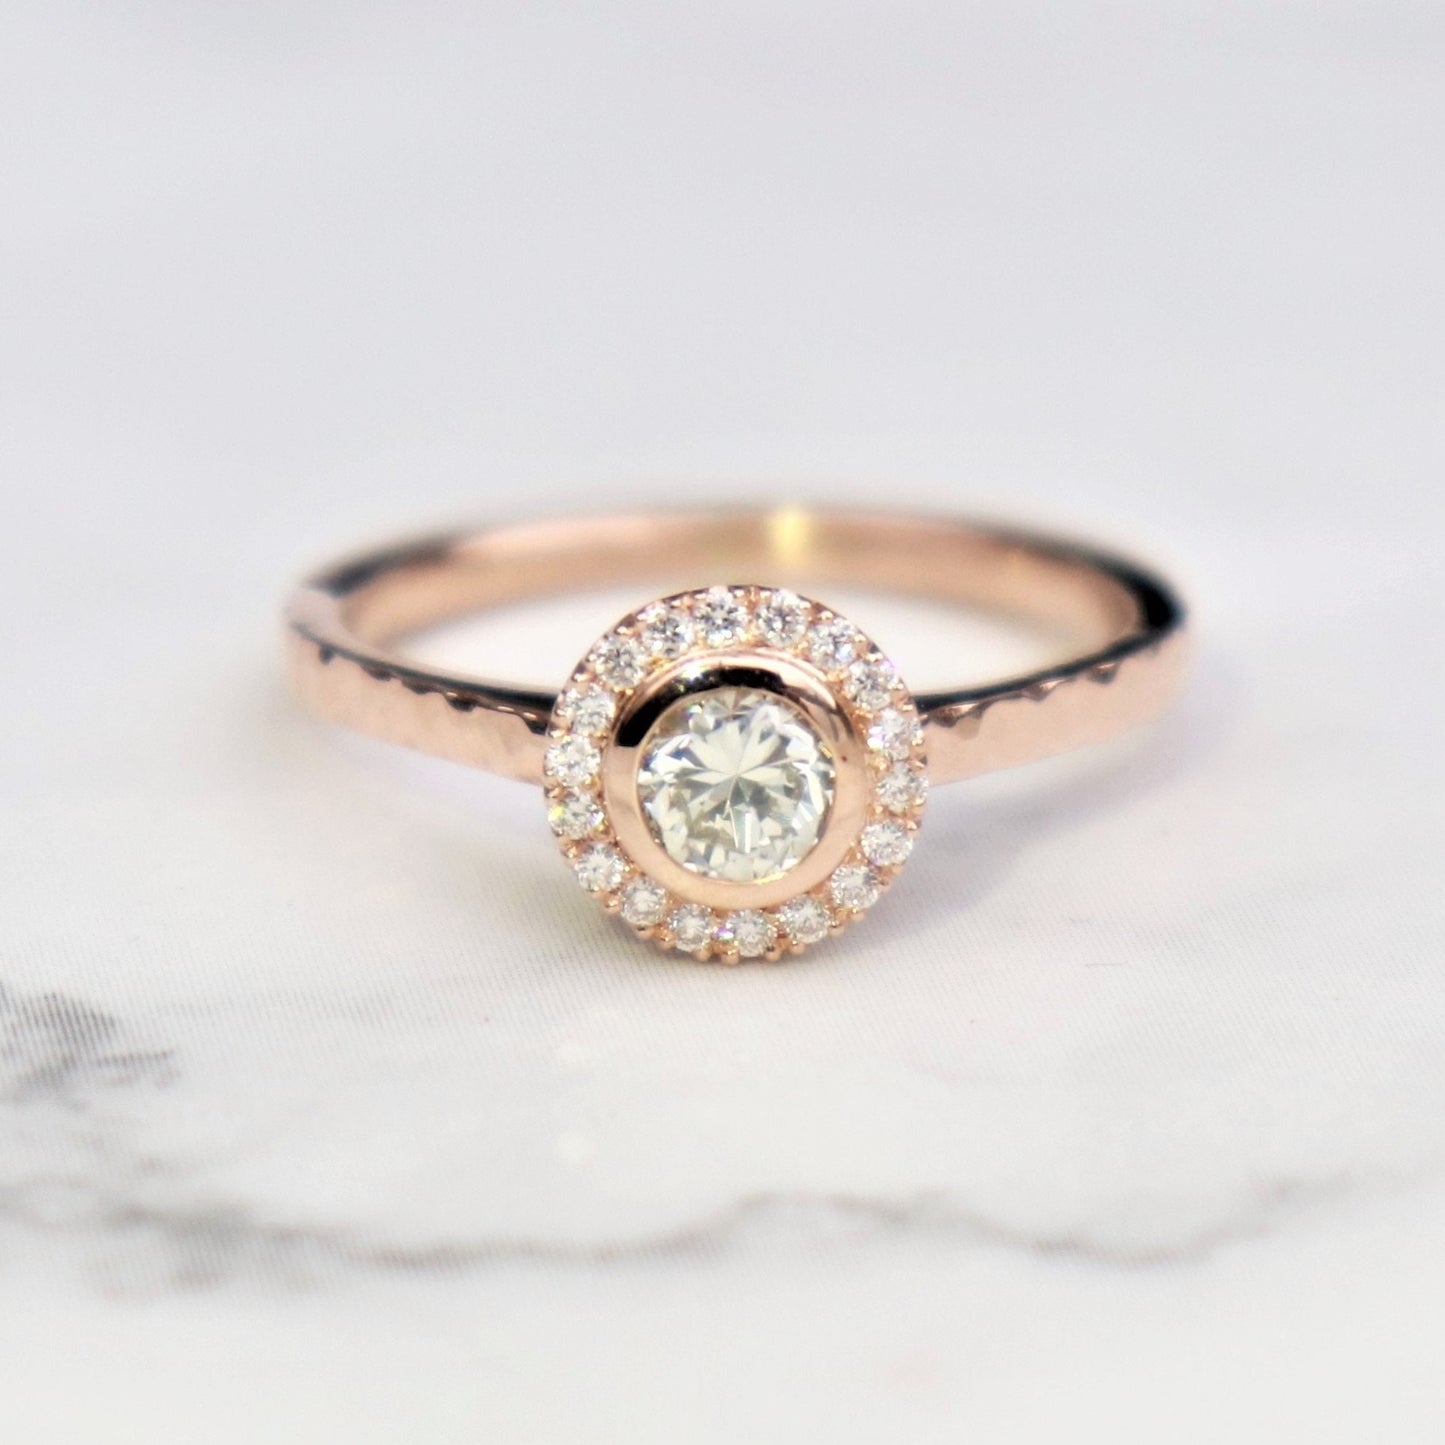 9ct rose gold diamond halo ring - Size L